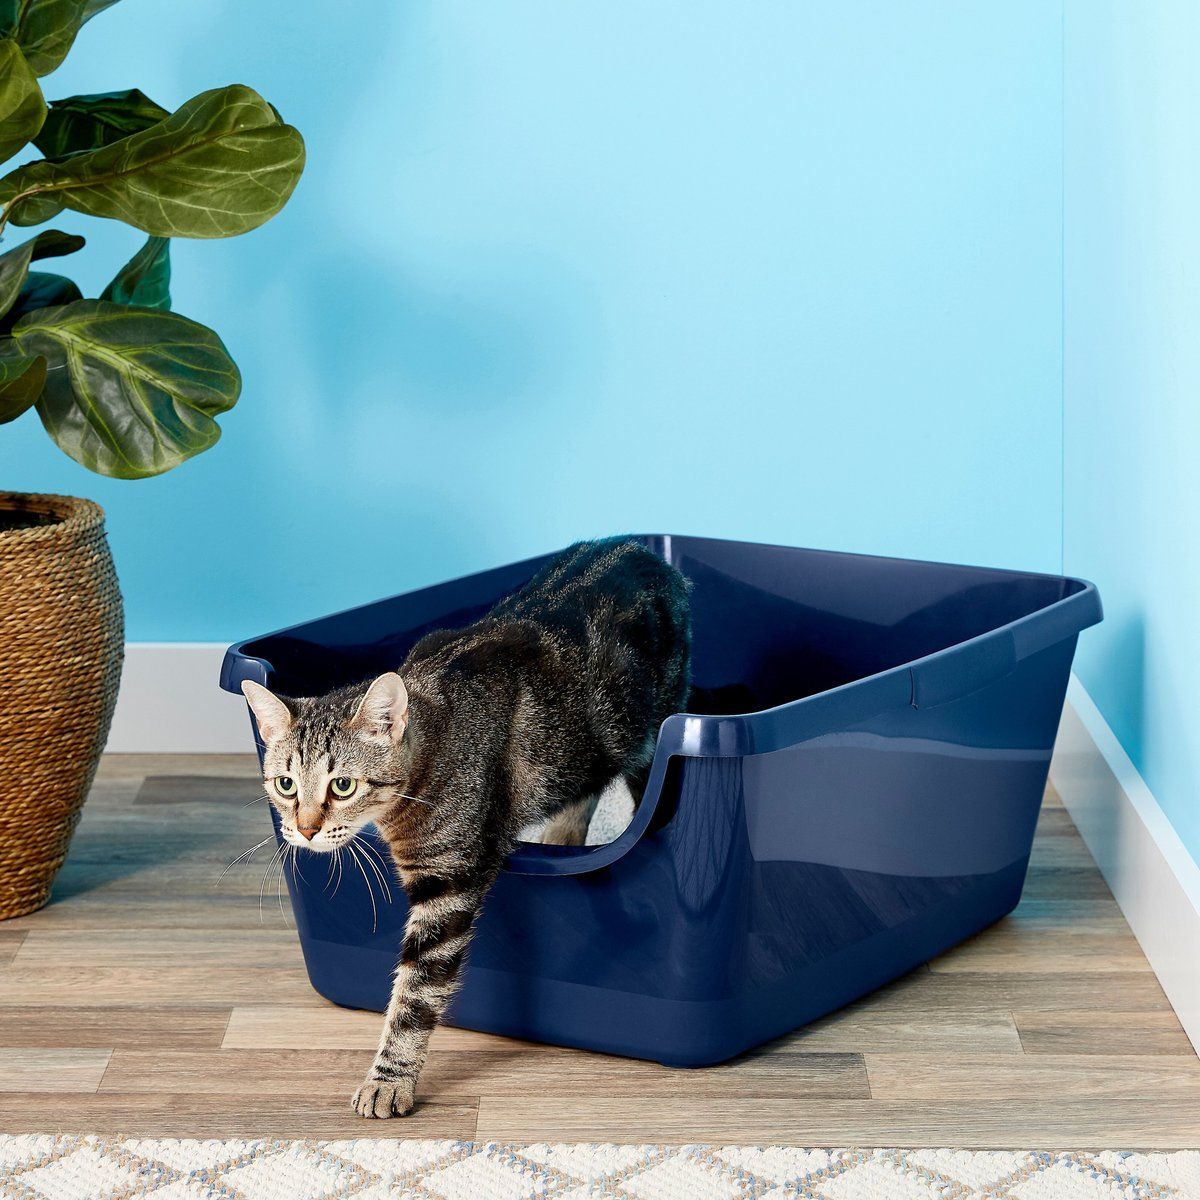 Frisco High-Sided Cat Litter Box